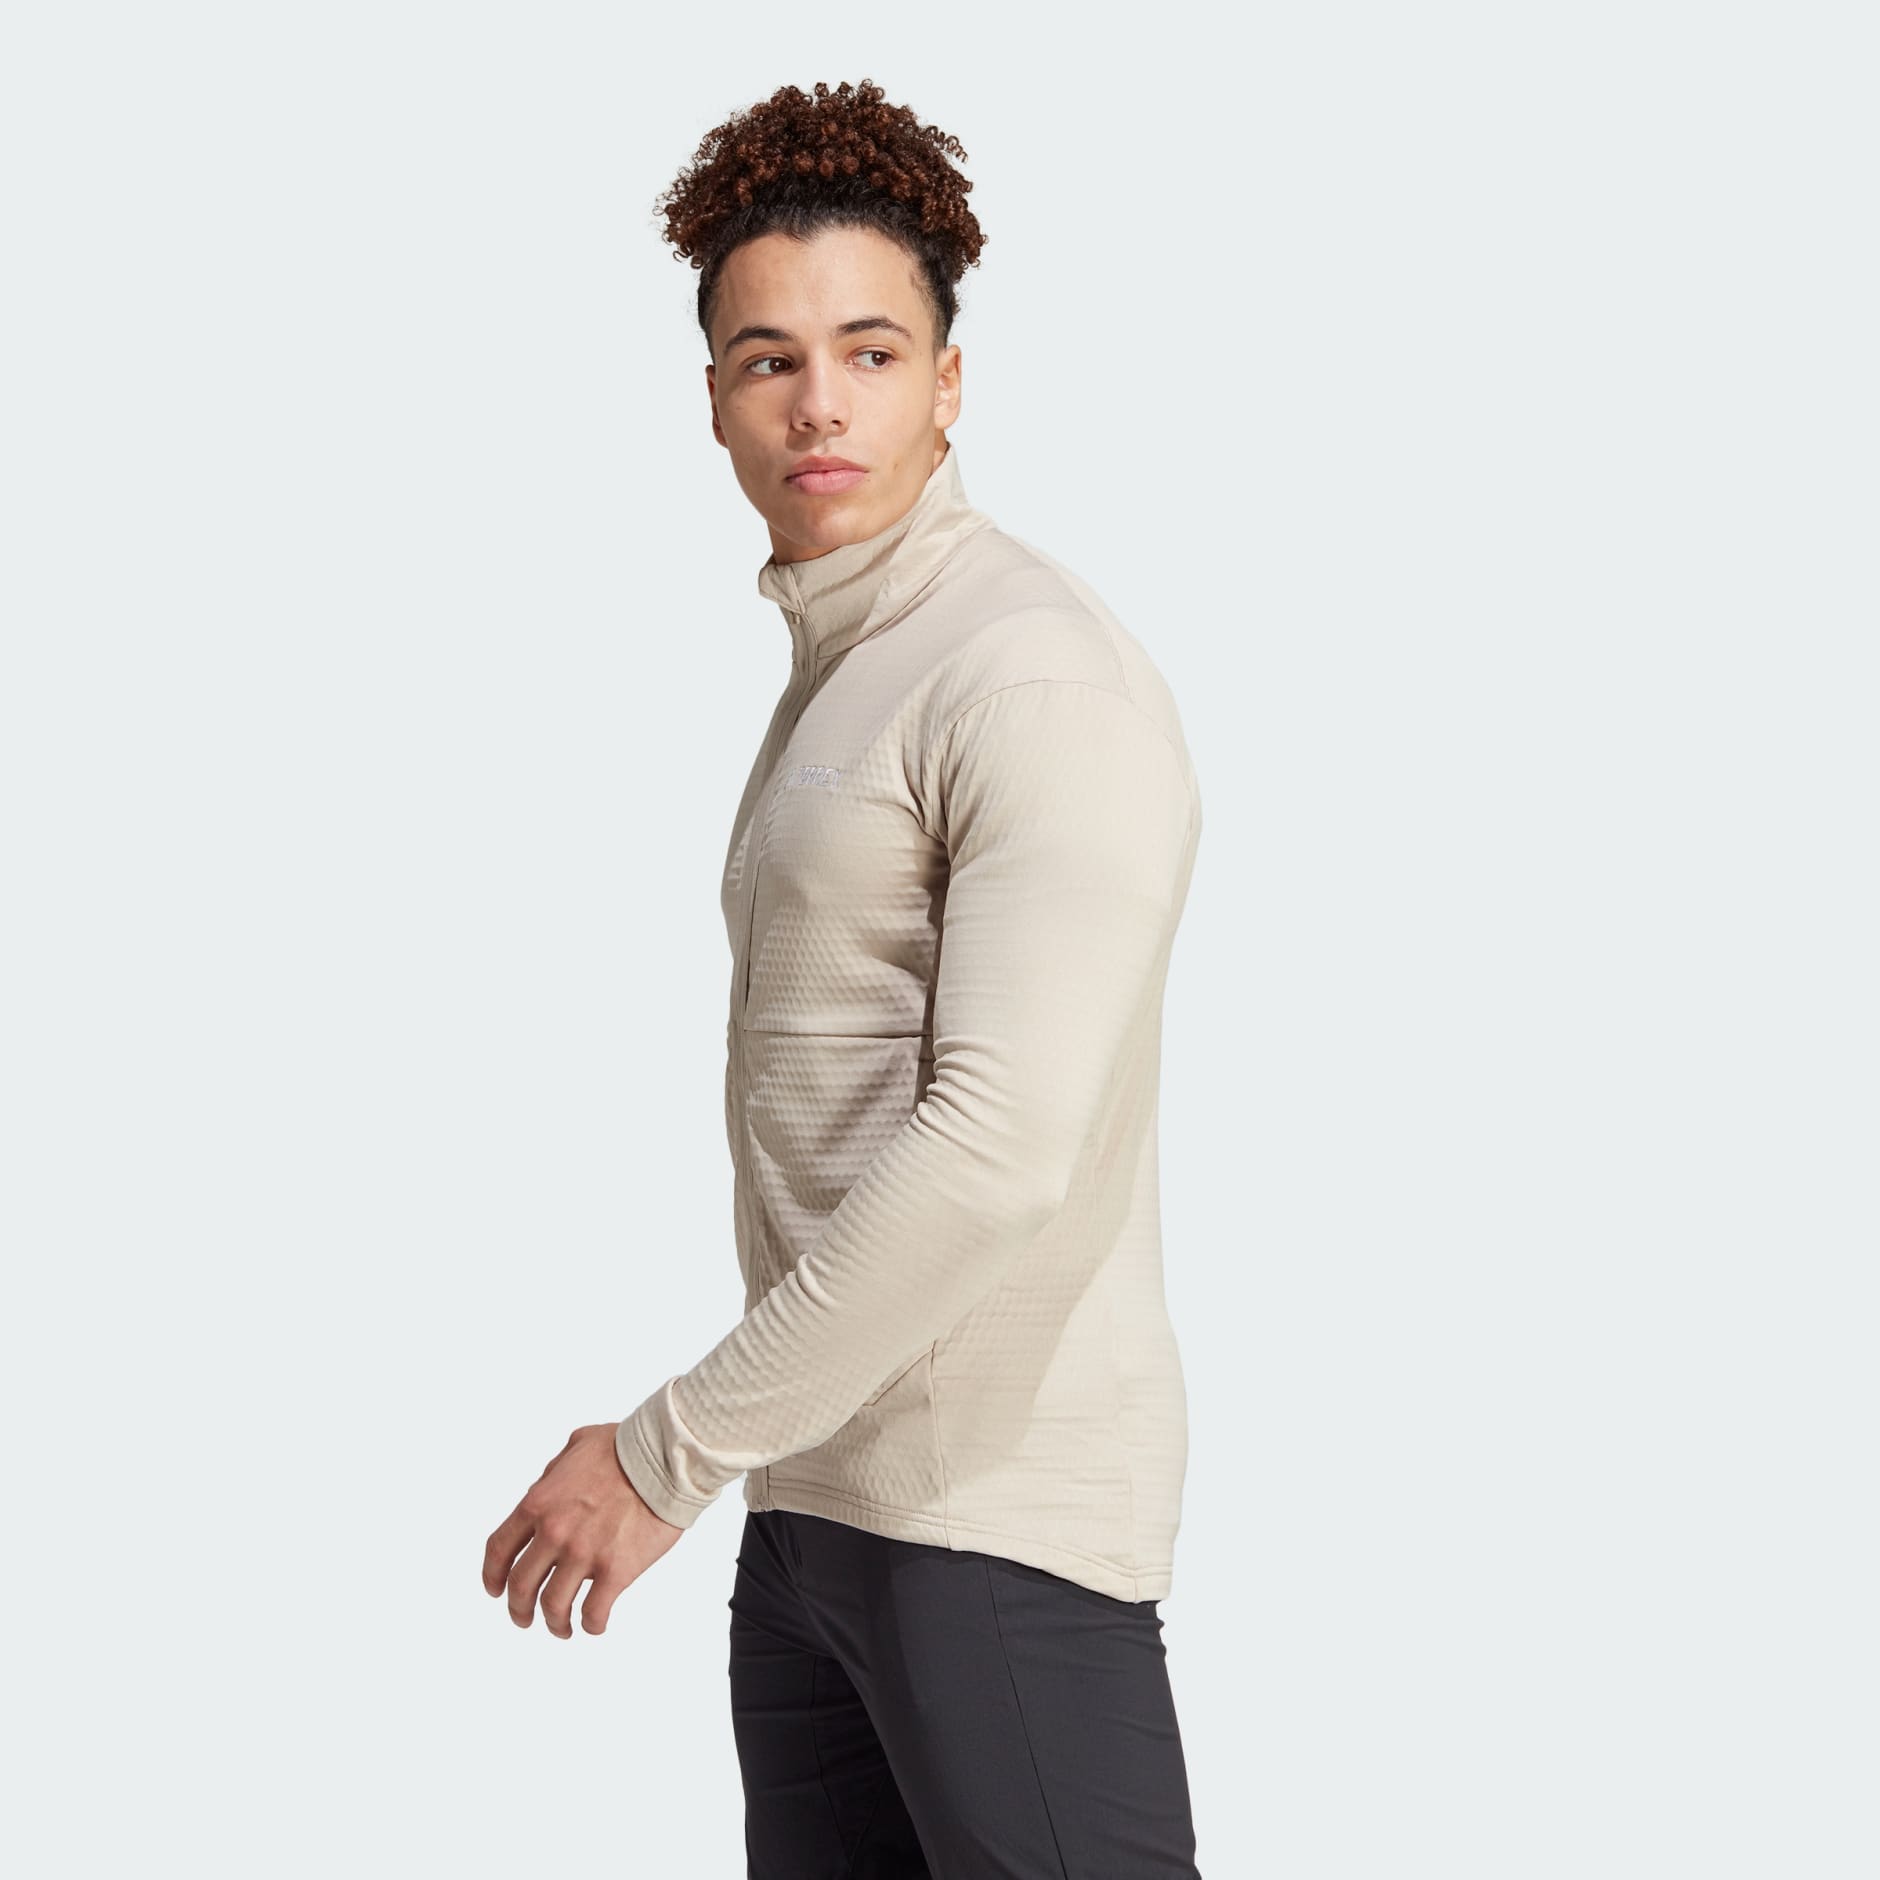 Clothing - Terrex Multi Light Fleece Full-Zip Jacket - Beige | adidas ...